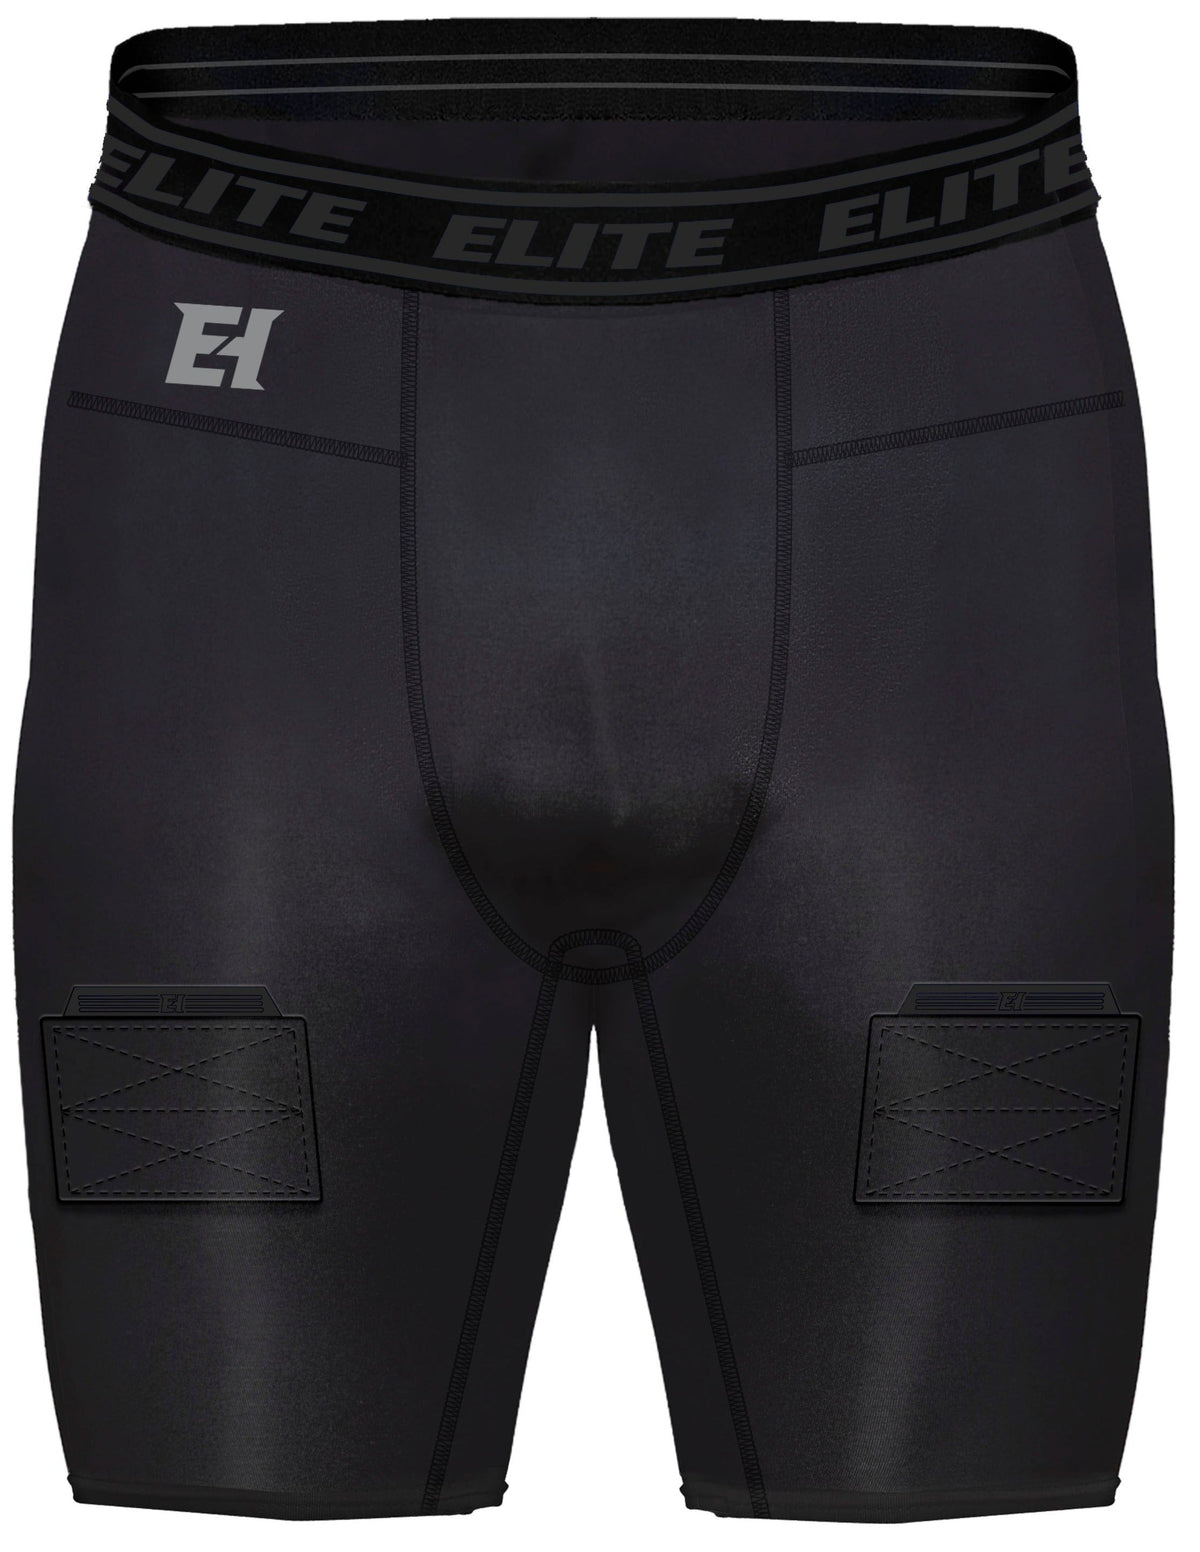 Elite Compression Shorts